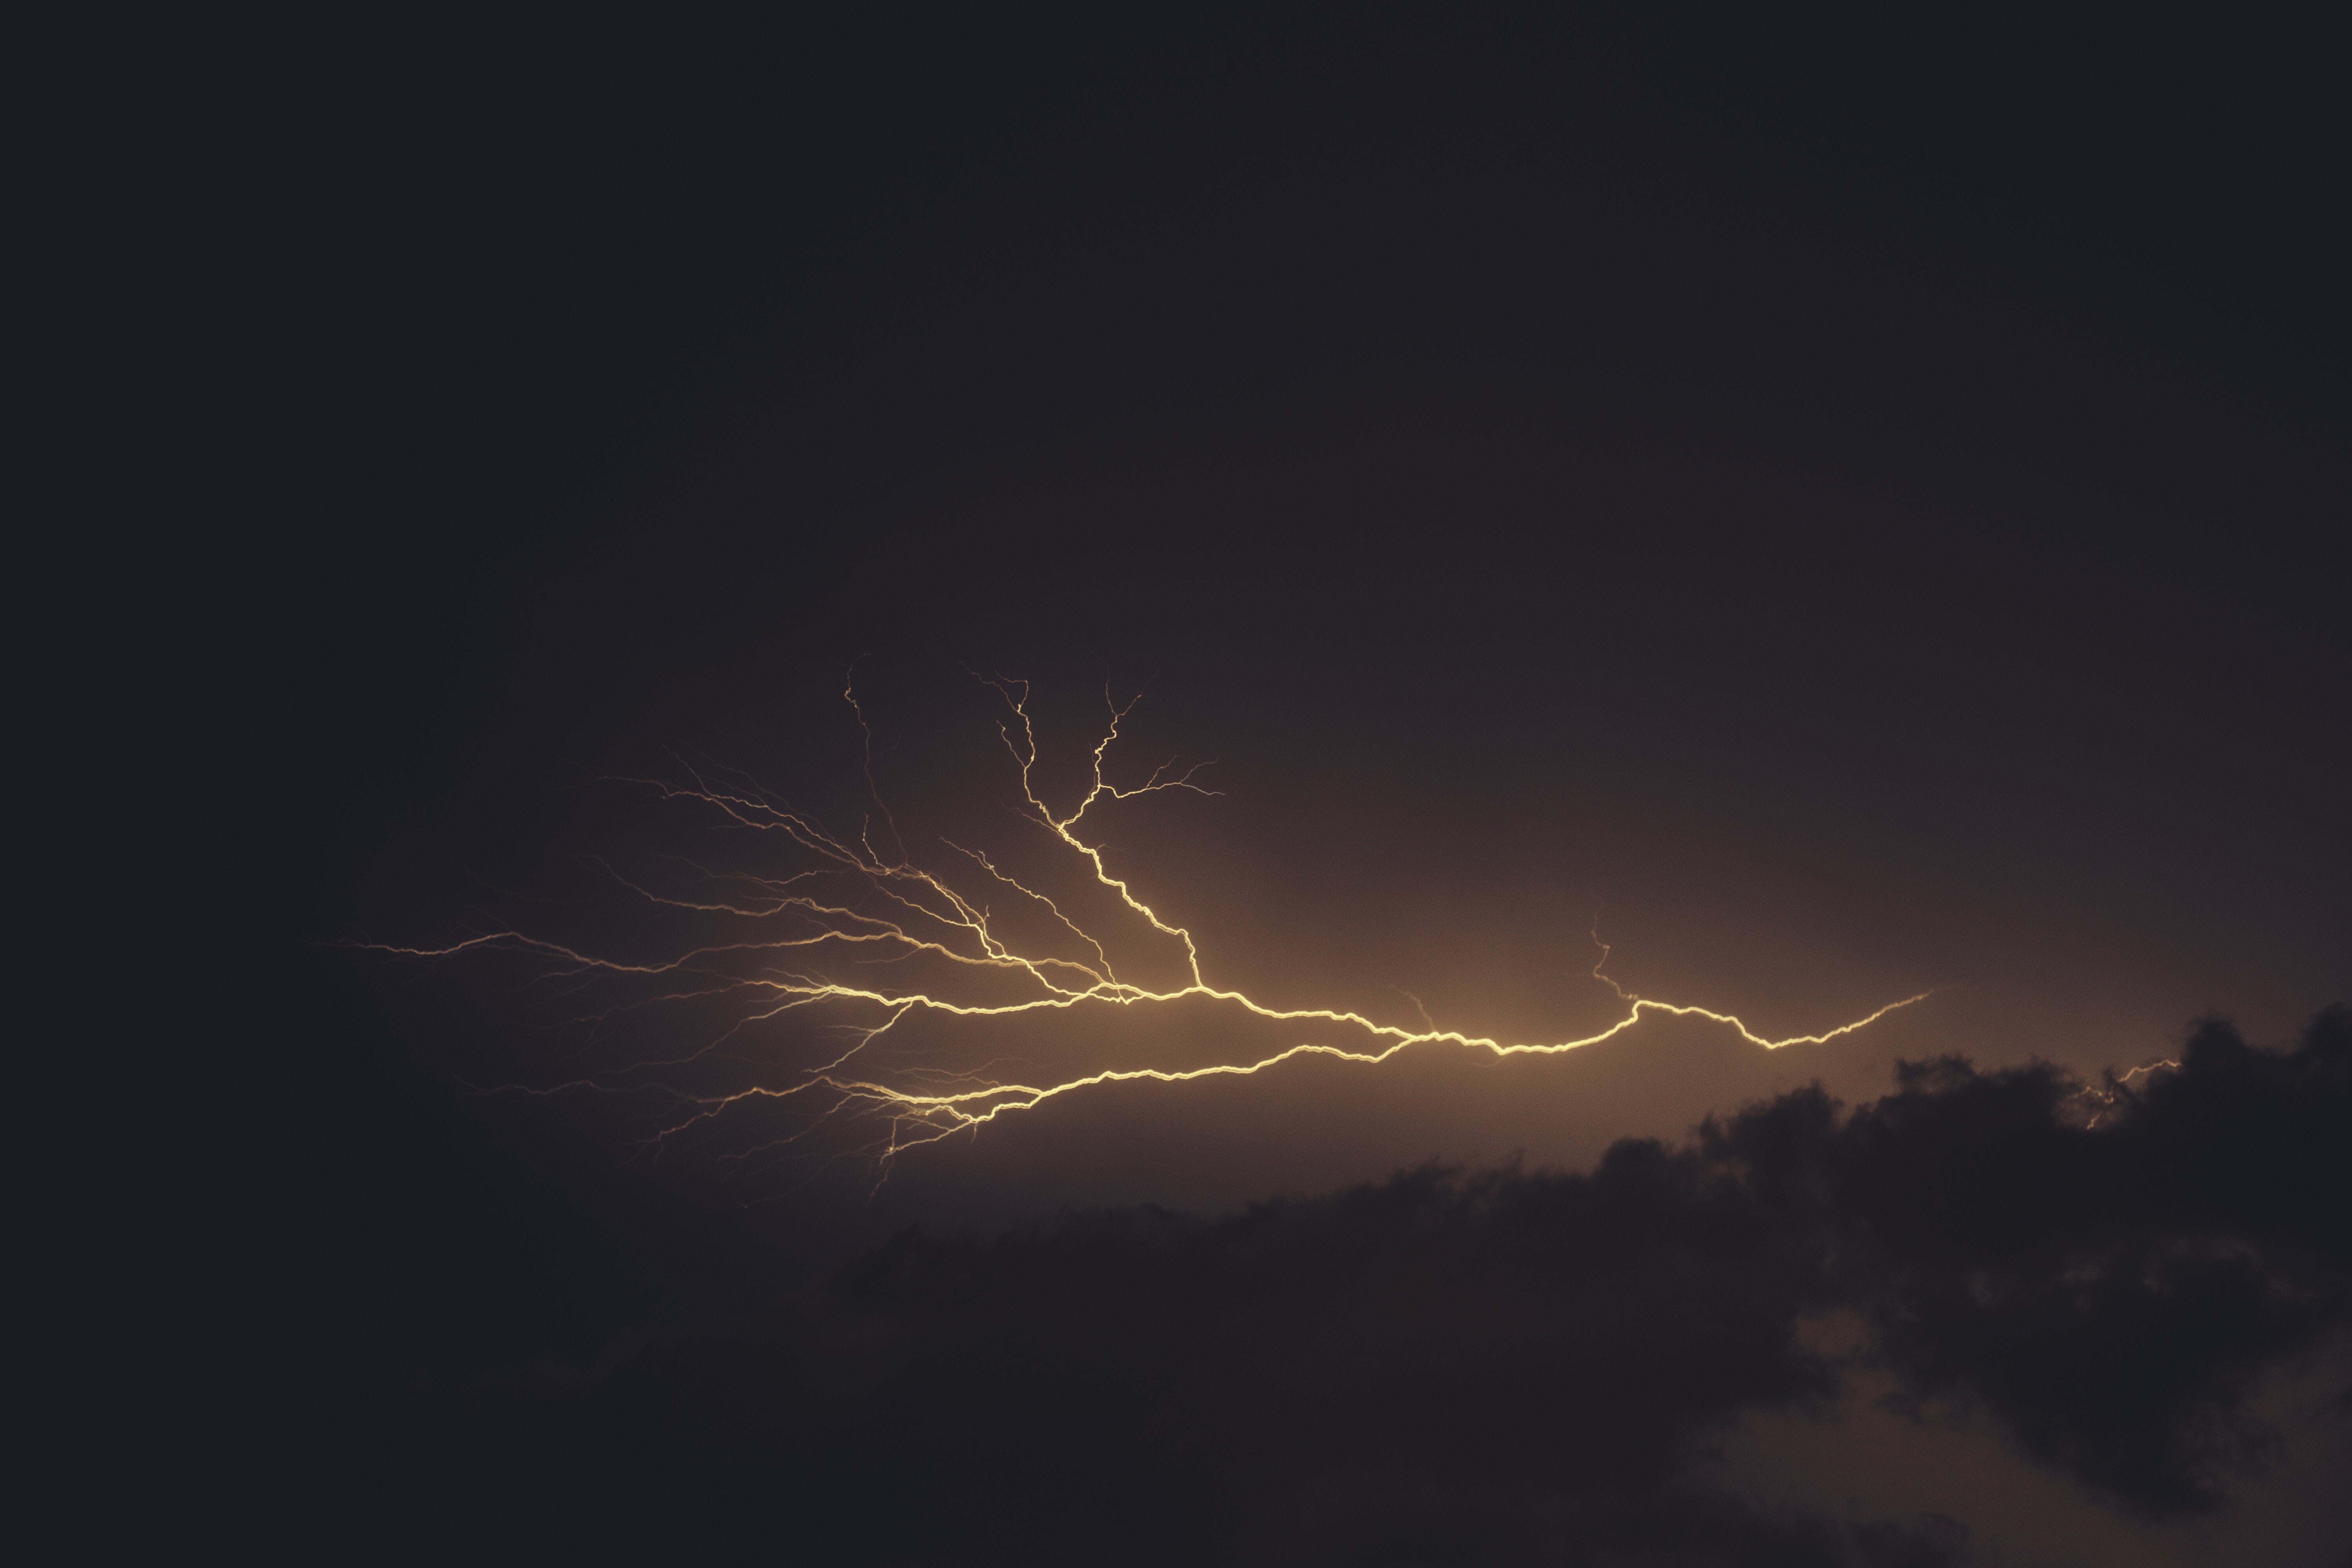 6000x4000 #yellow, #sideways, #cloud, #lightning, #streak, #stormy, #strike, #hong kong, #electricity, #silhouette, #moody, #night, #light, # thunder, #shadow, #storm, #nature, #PNG image, #electric, #dark, #sky HD Wallpaper